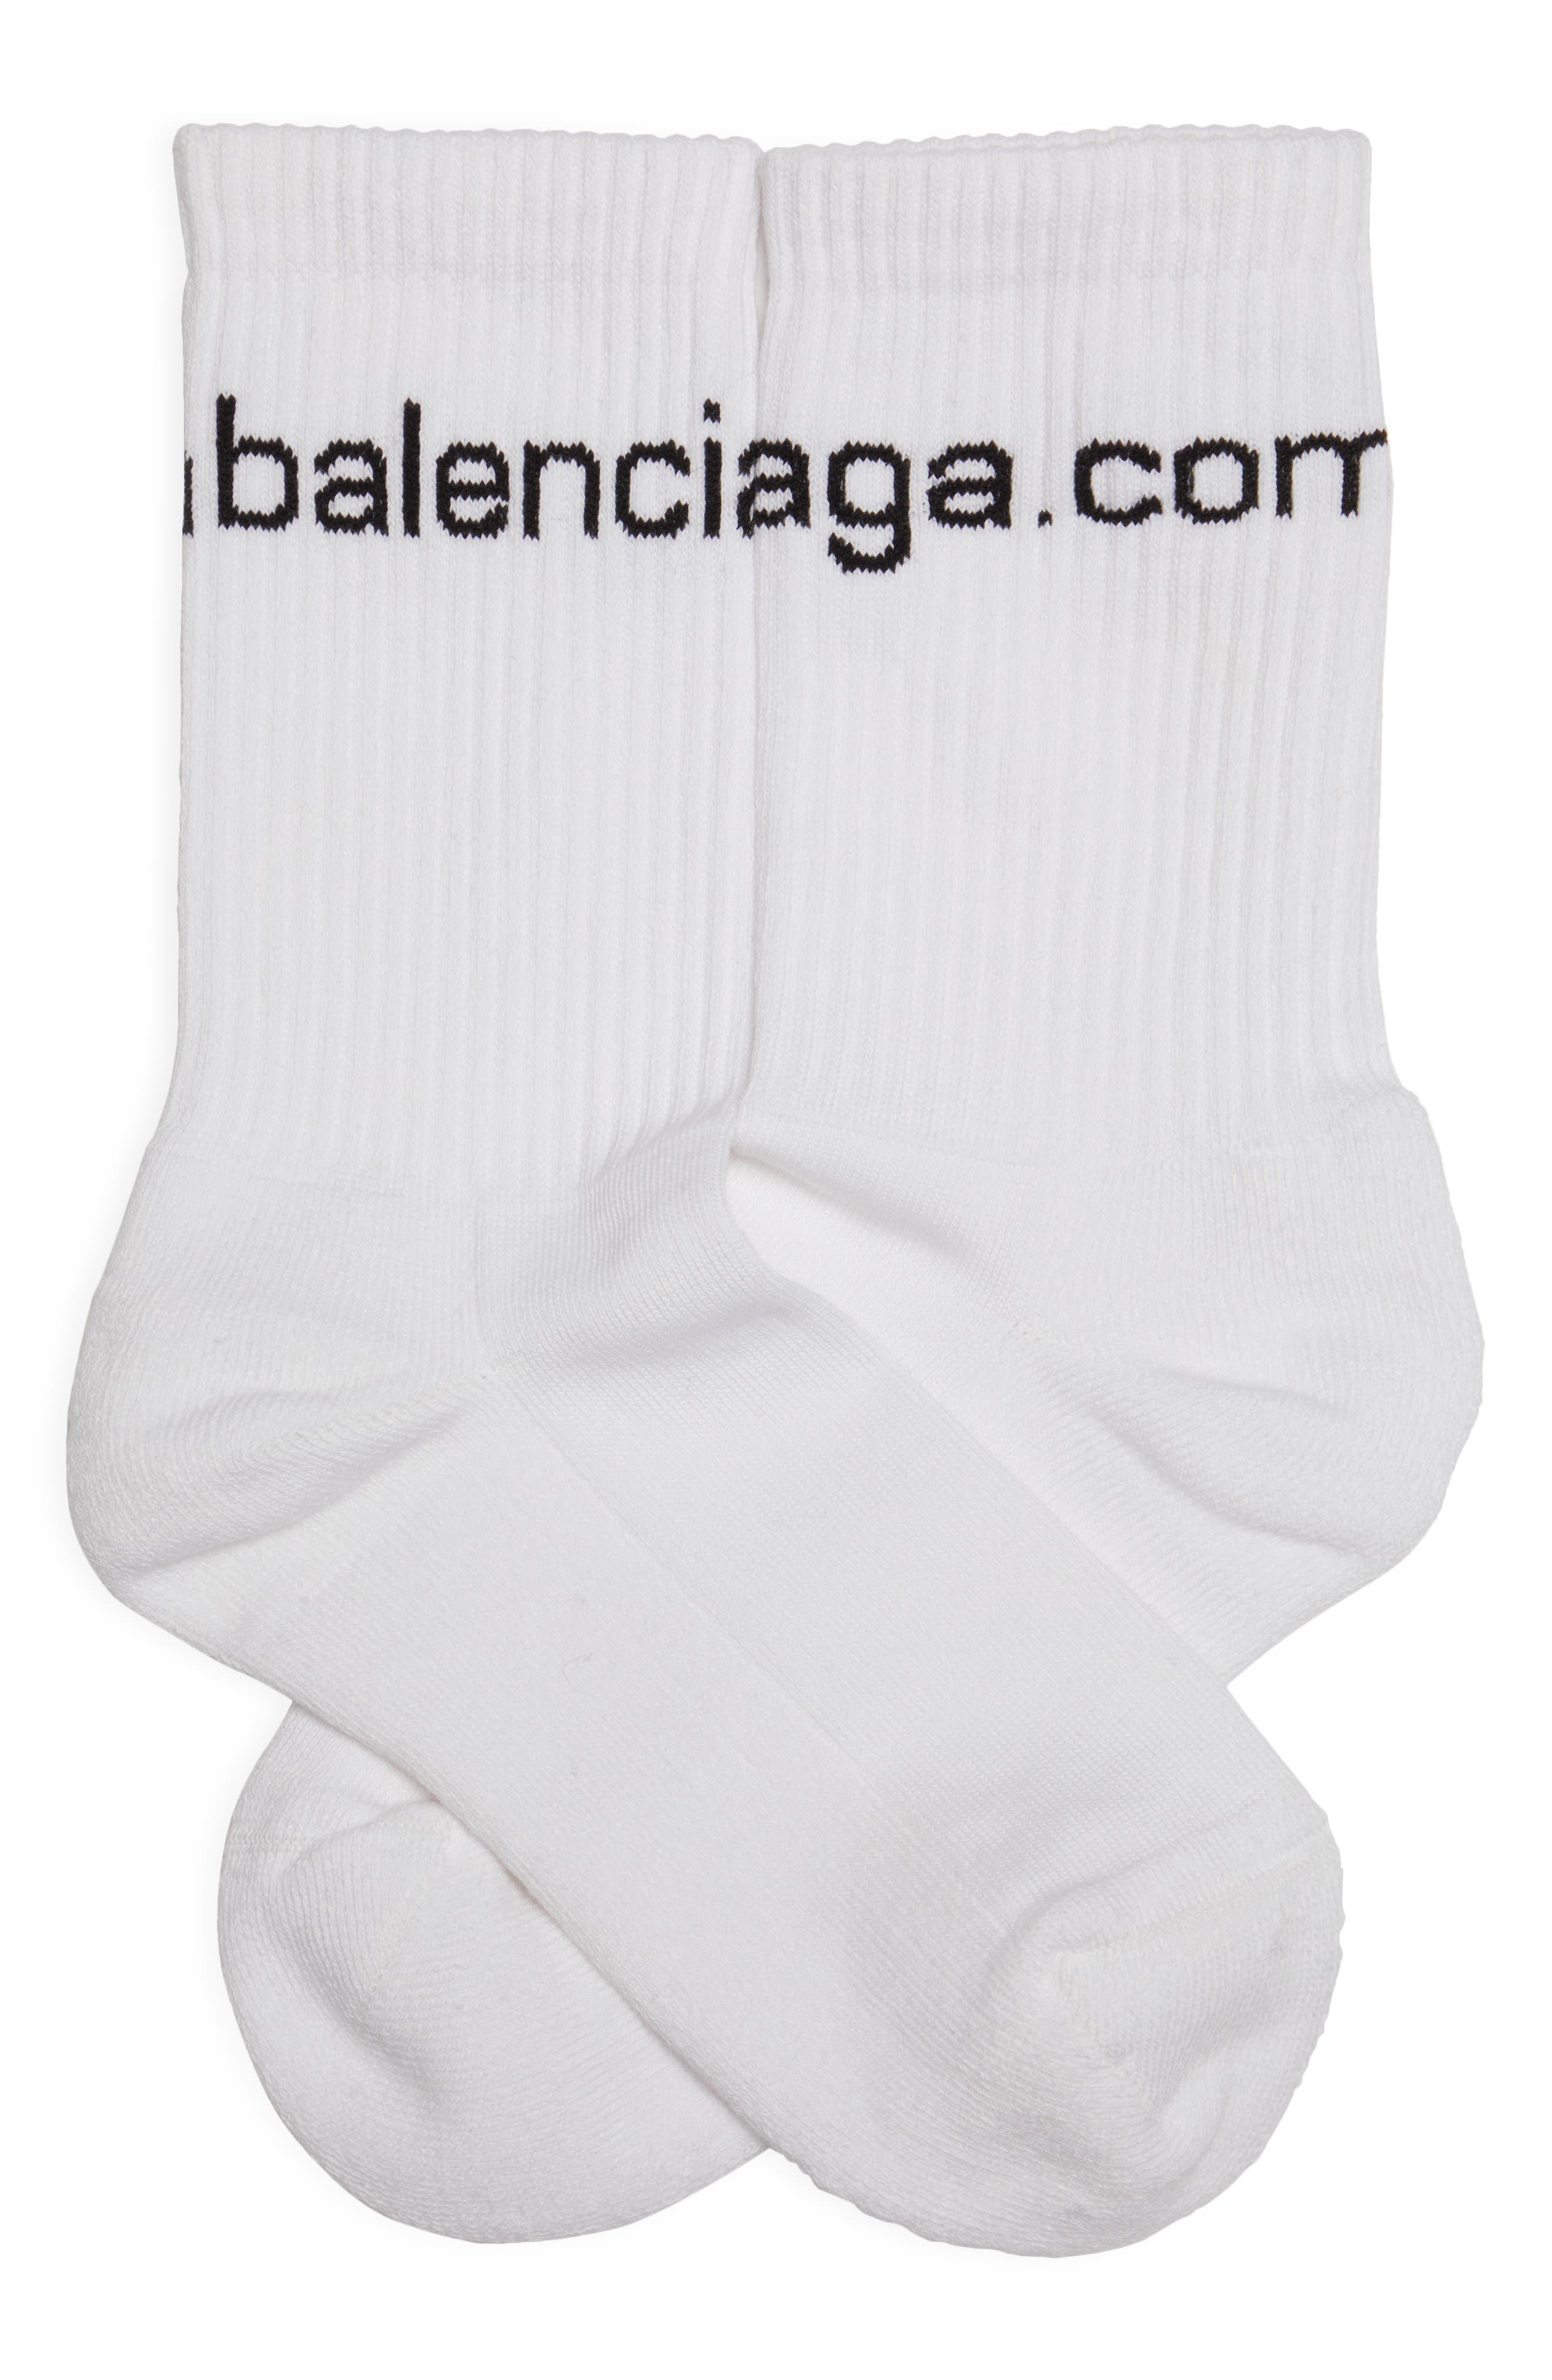 Balenciaga .com Crew Socks in White | Lyst